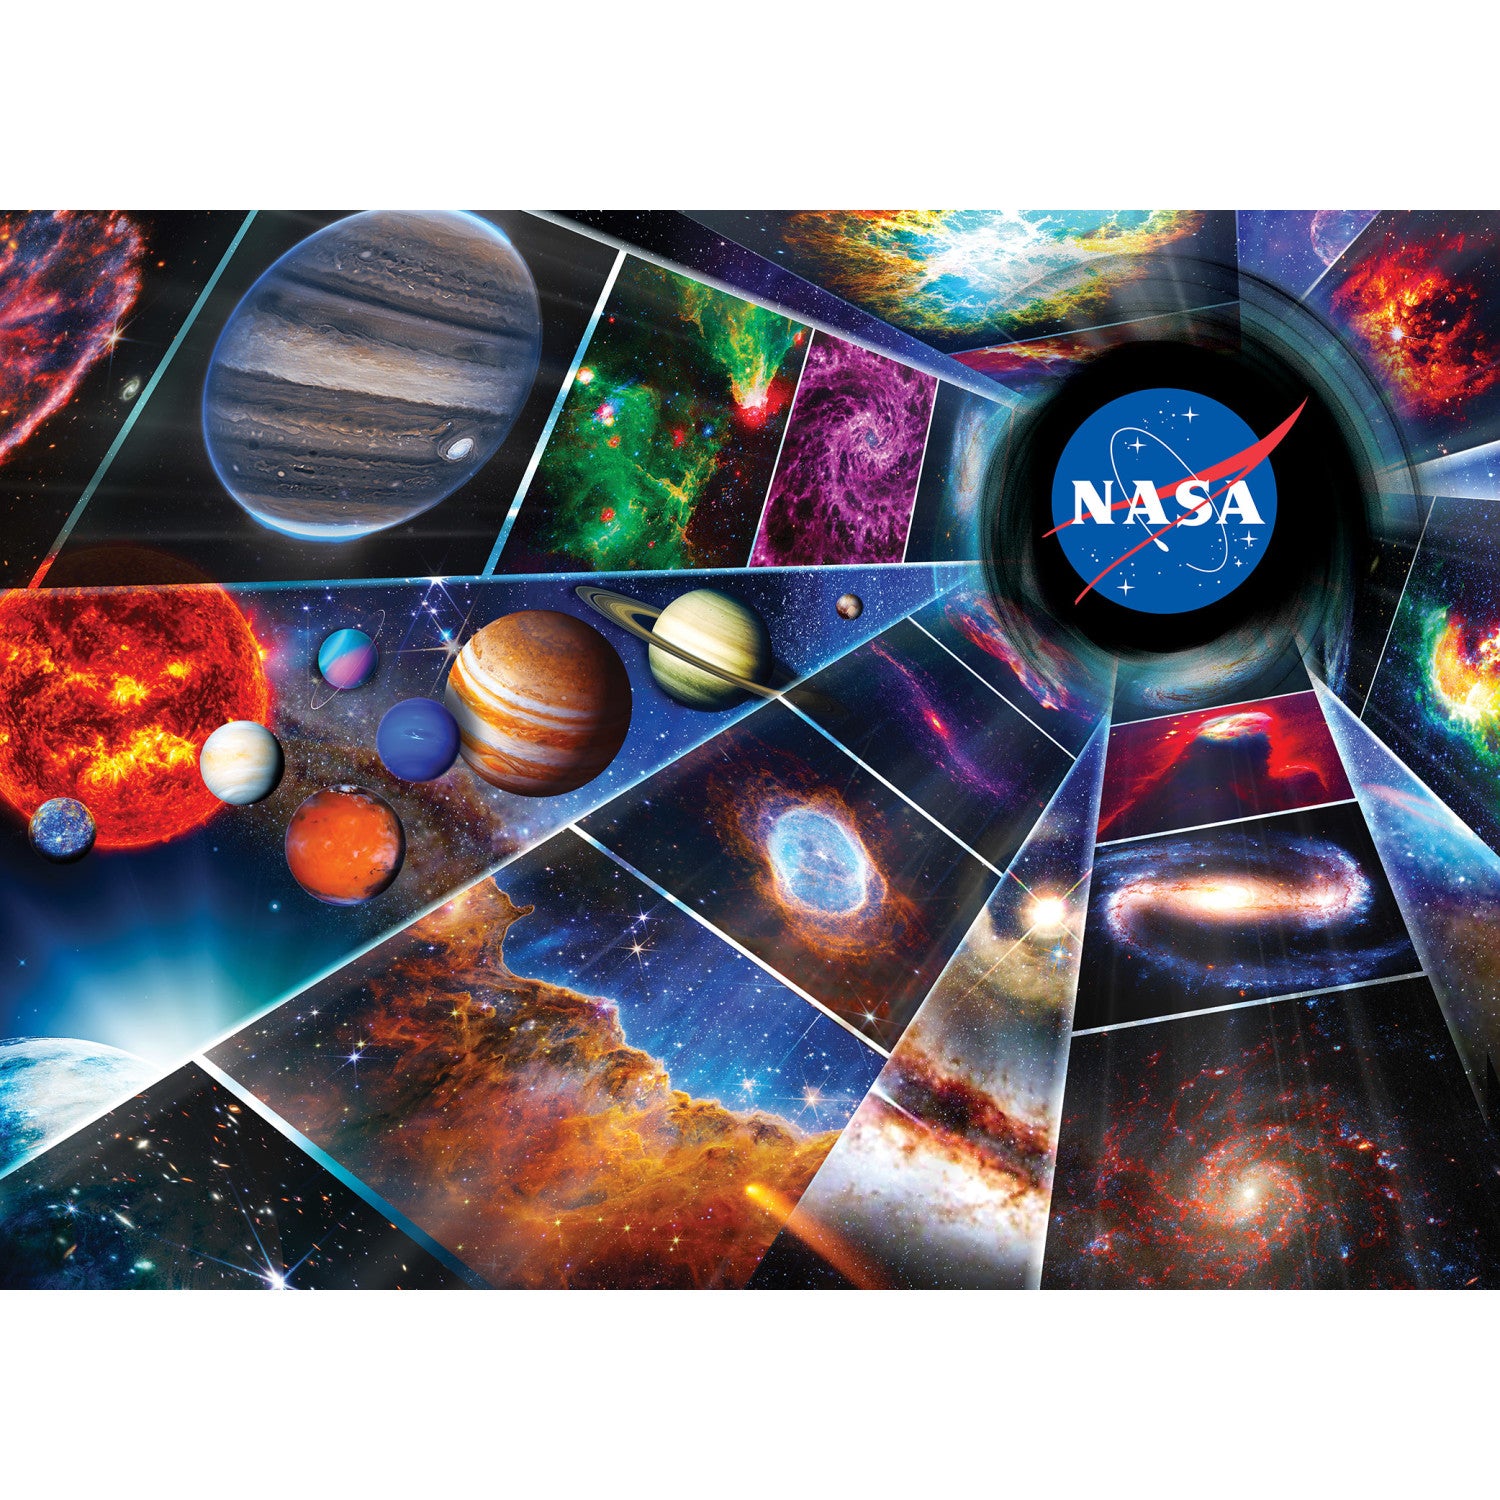 NASA - The Universe 1000 Piece Puzzle